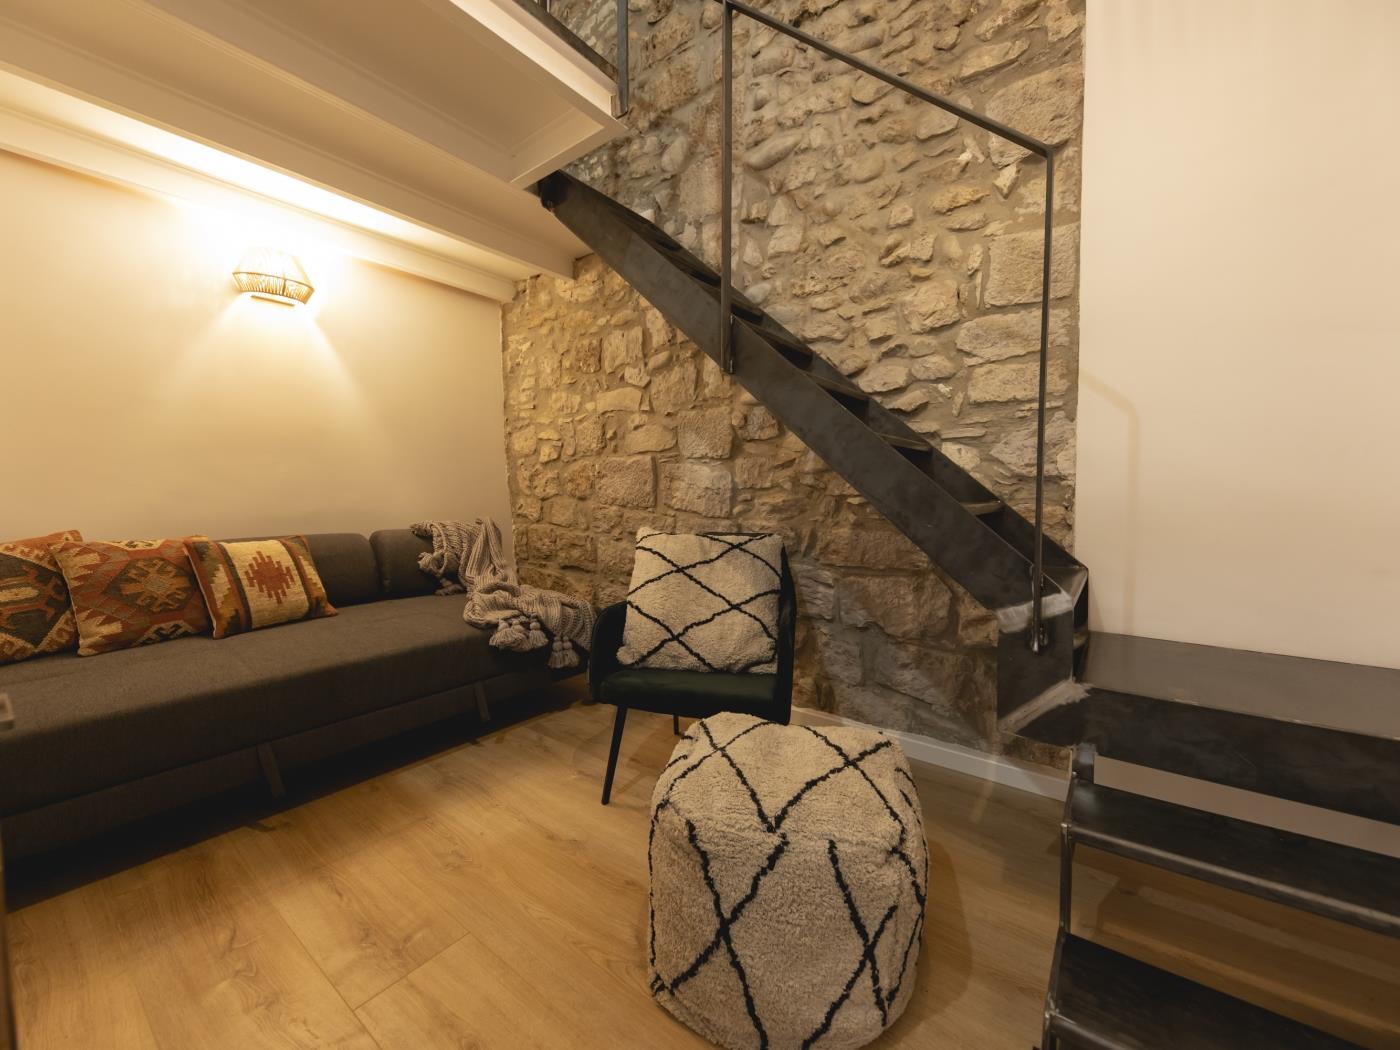 Bravissimo Bali, preciós apartament, 2 habitacions a Girona